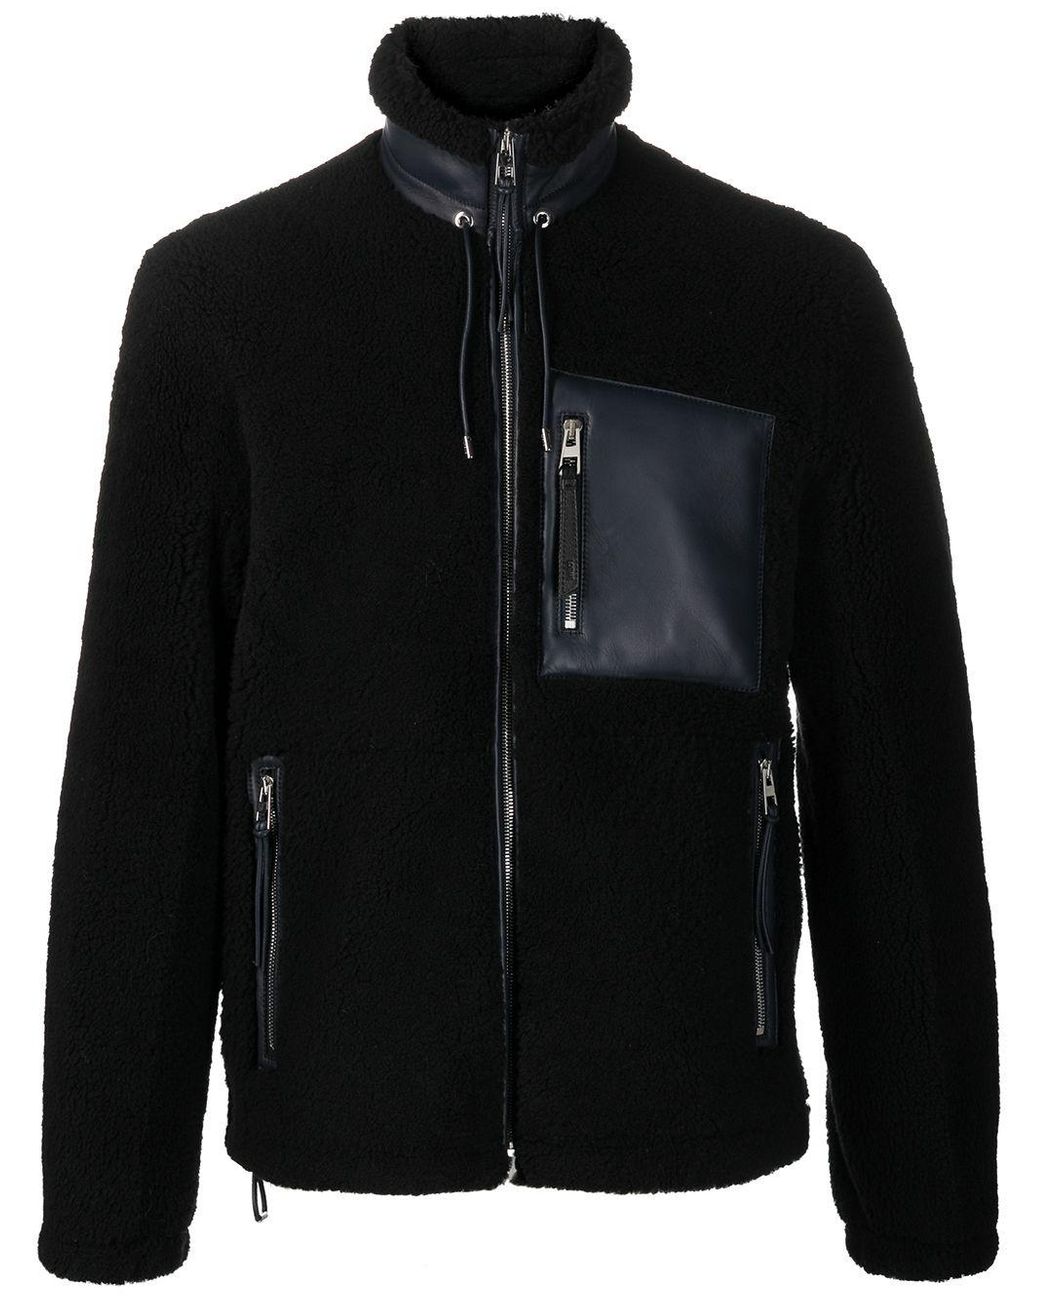 Loewe Leather-pocket Shearling Jacket in Black for Men - Lyst